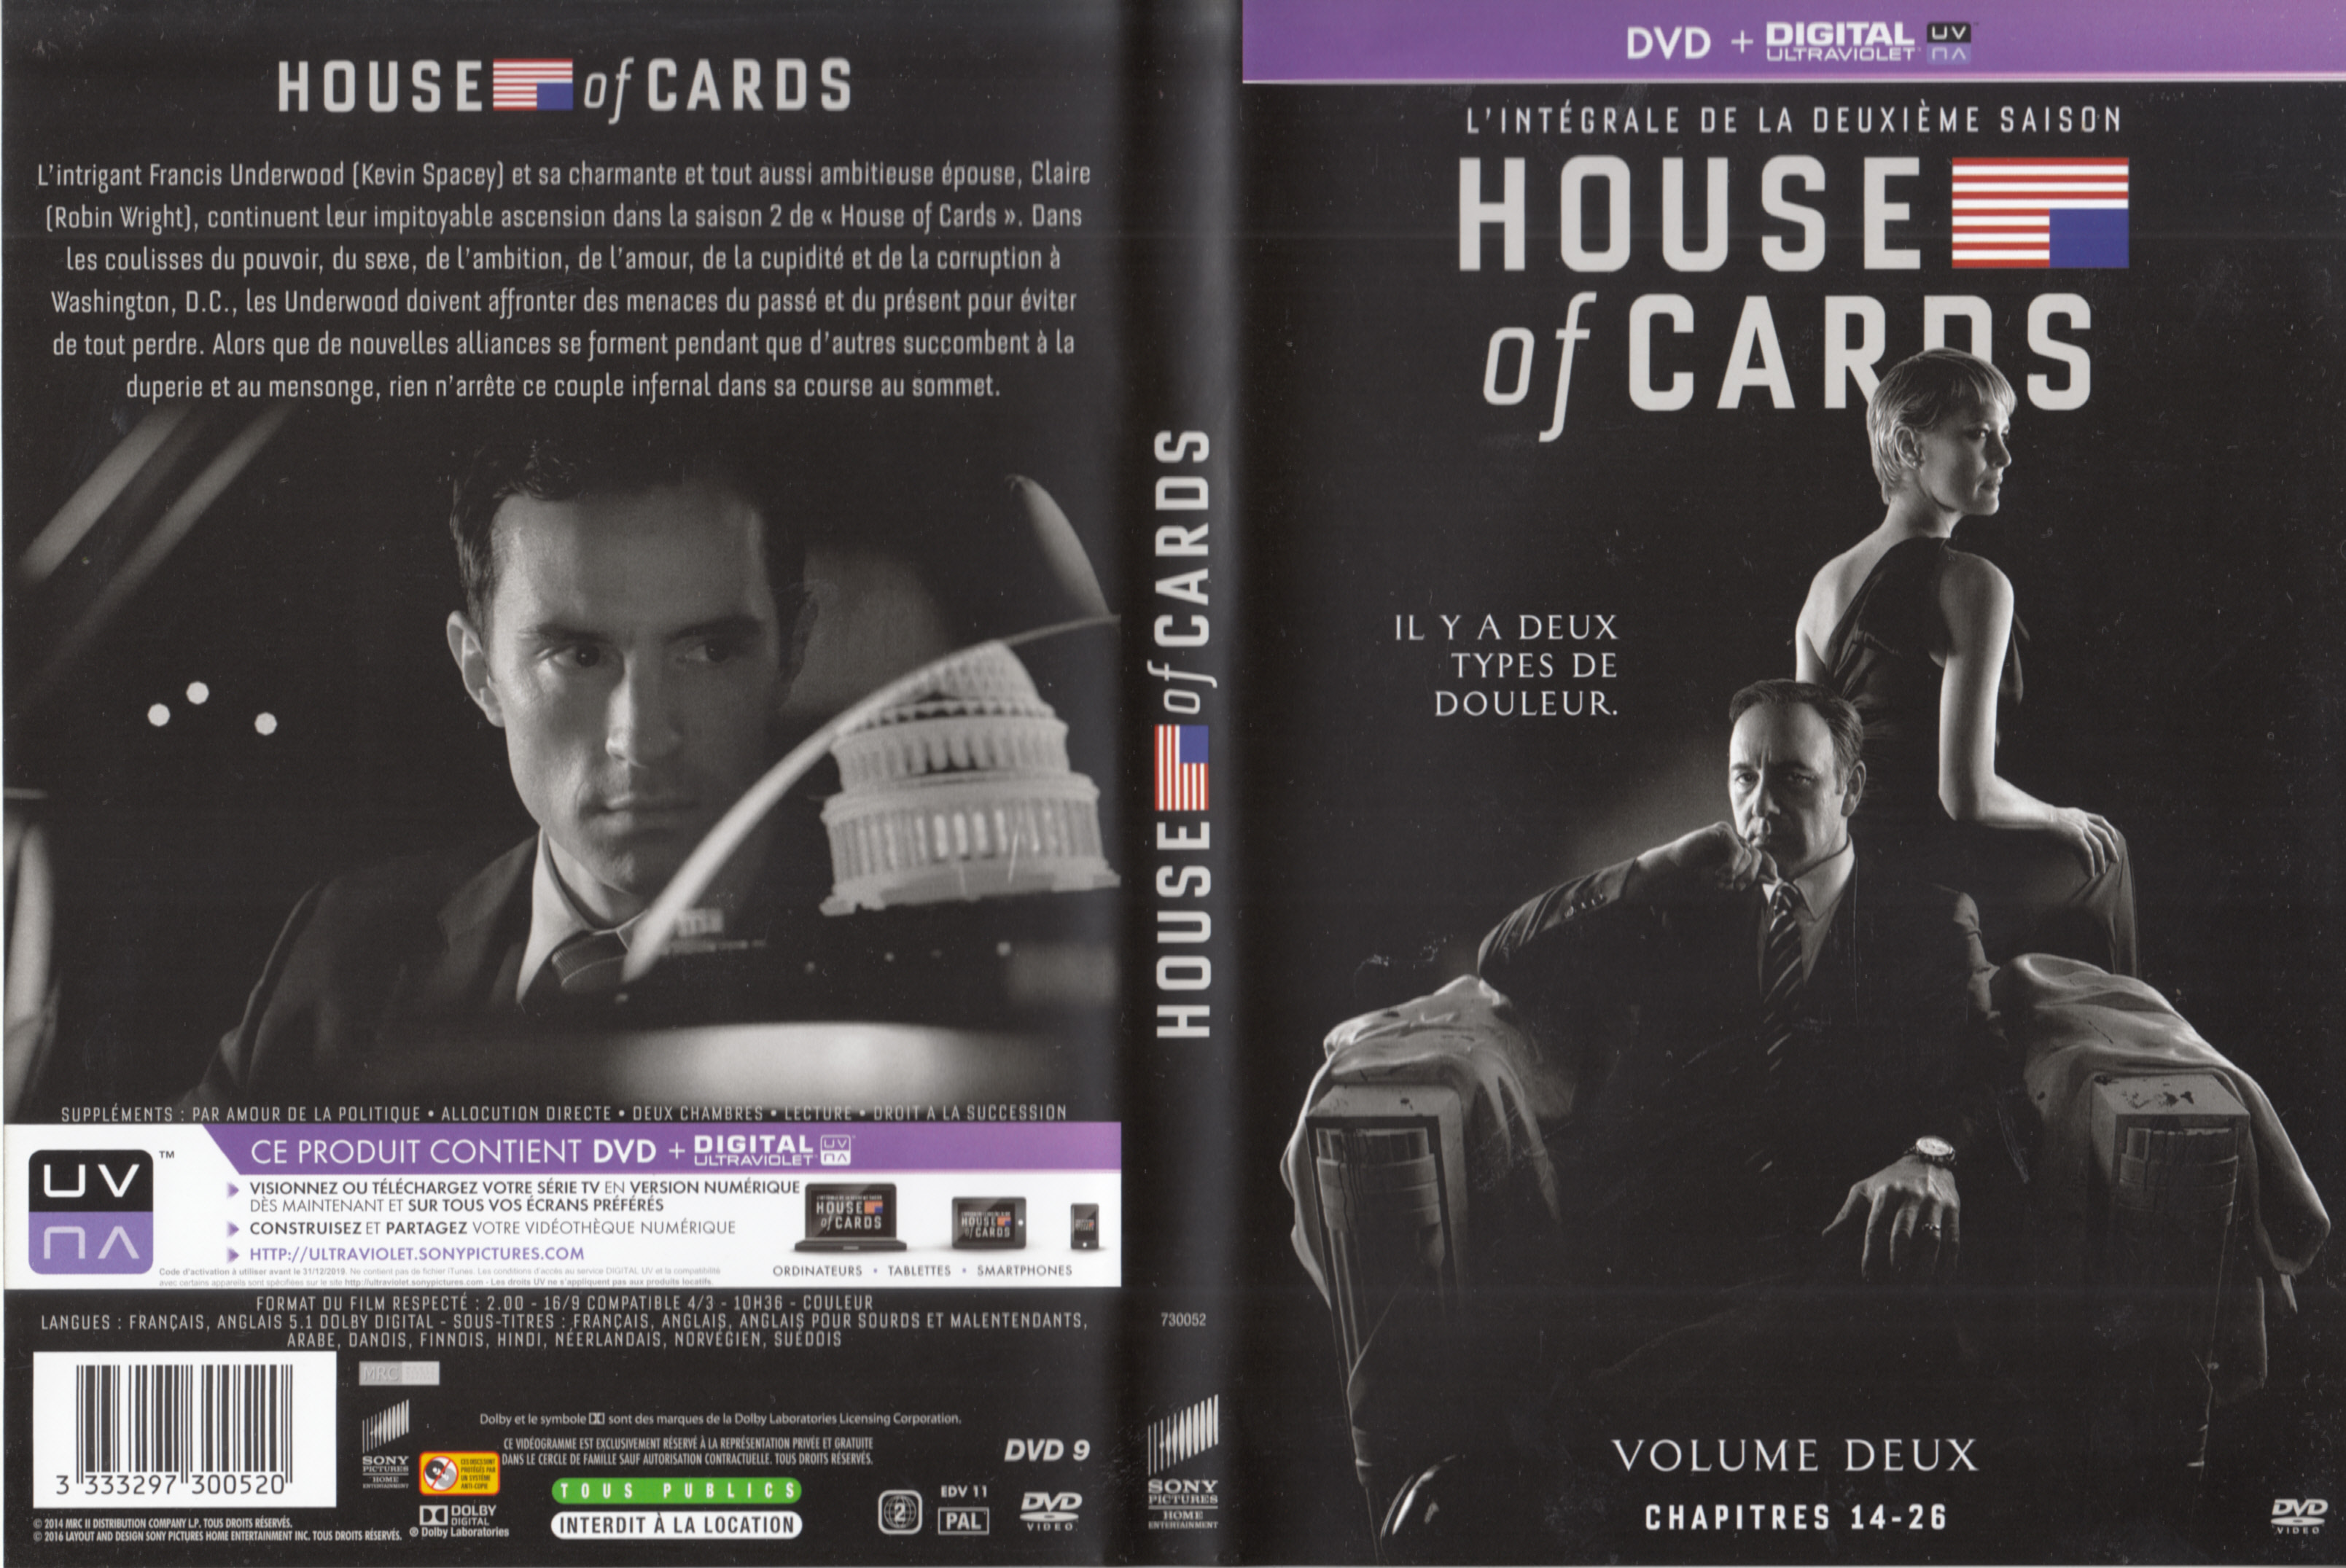 Jaquette DVD House Of Cards saison 2